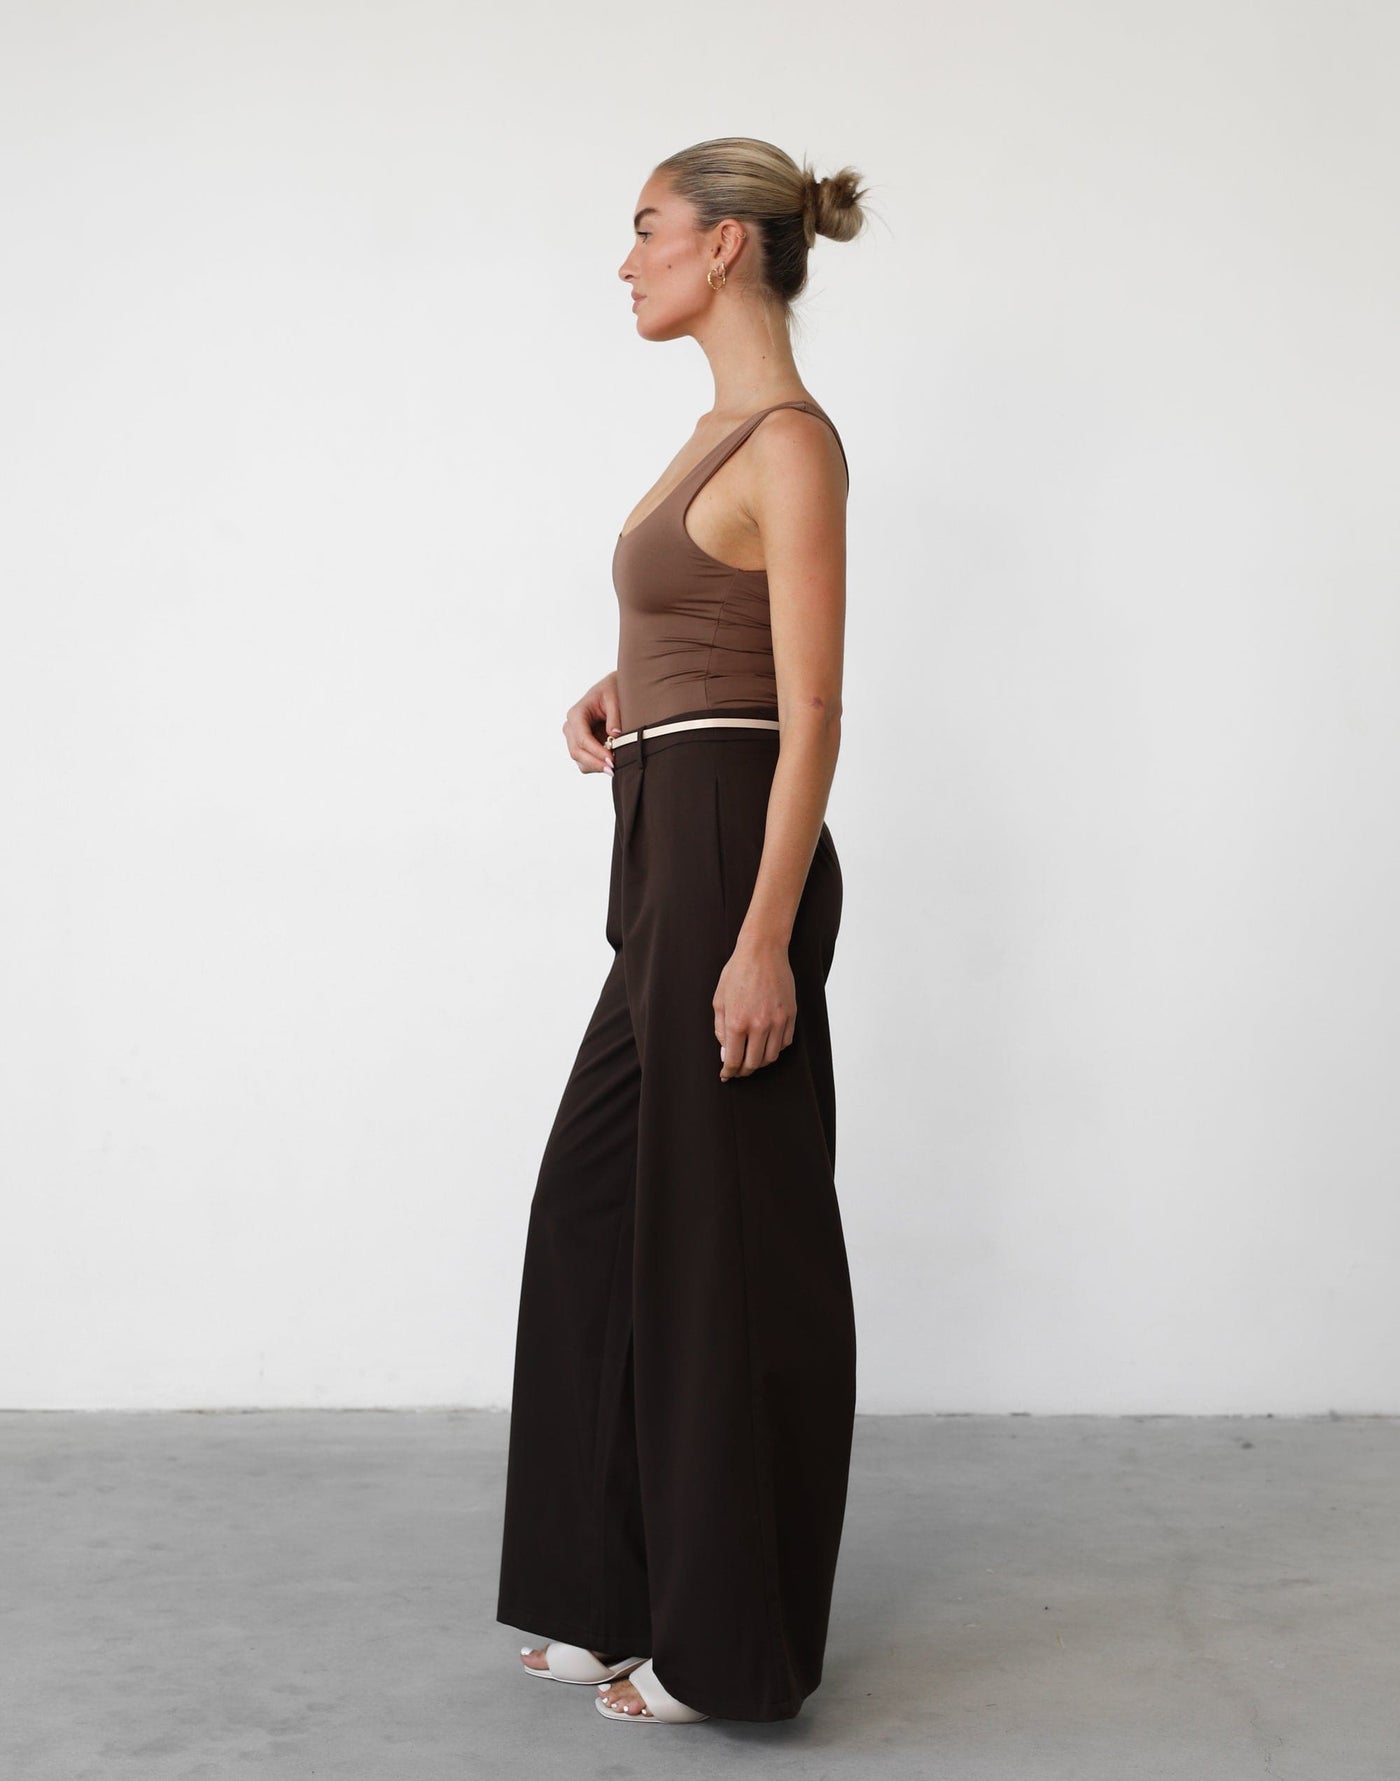 Levitate Bodysuit (Mocha) - Low Back Scoop Neck Bodysuit - Women's Top - Charcoal Clothing